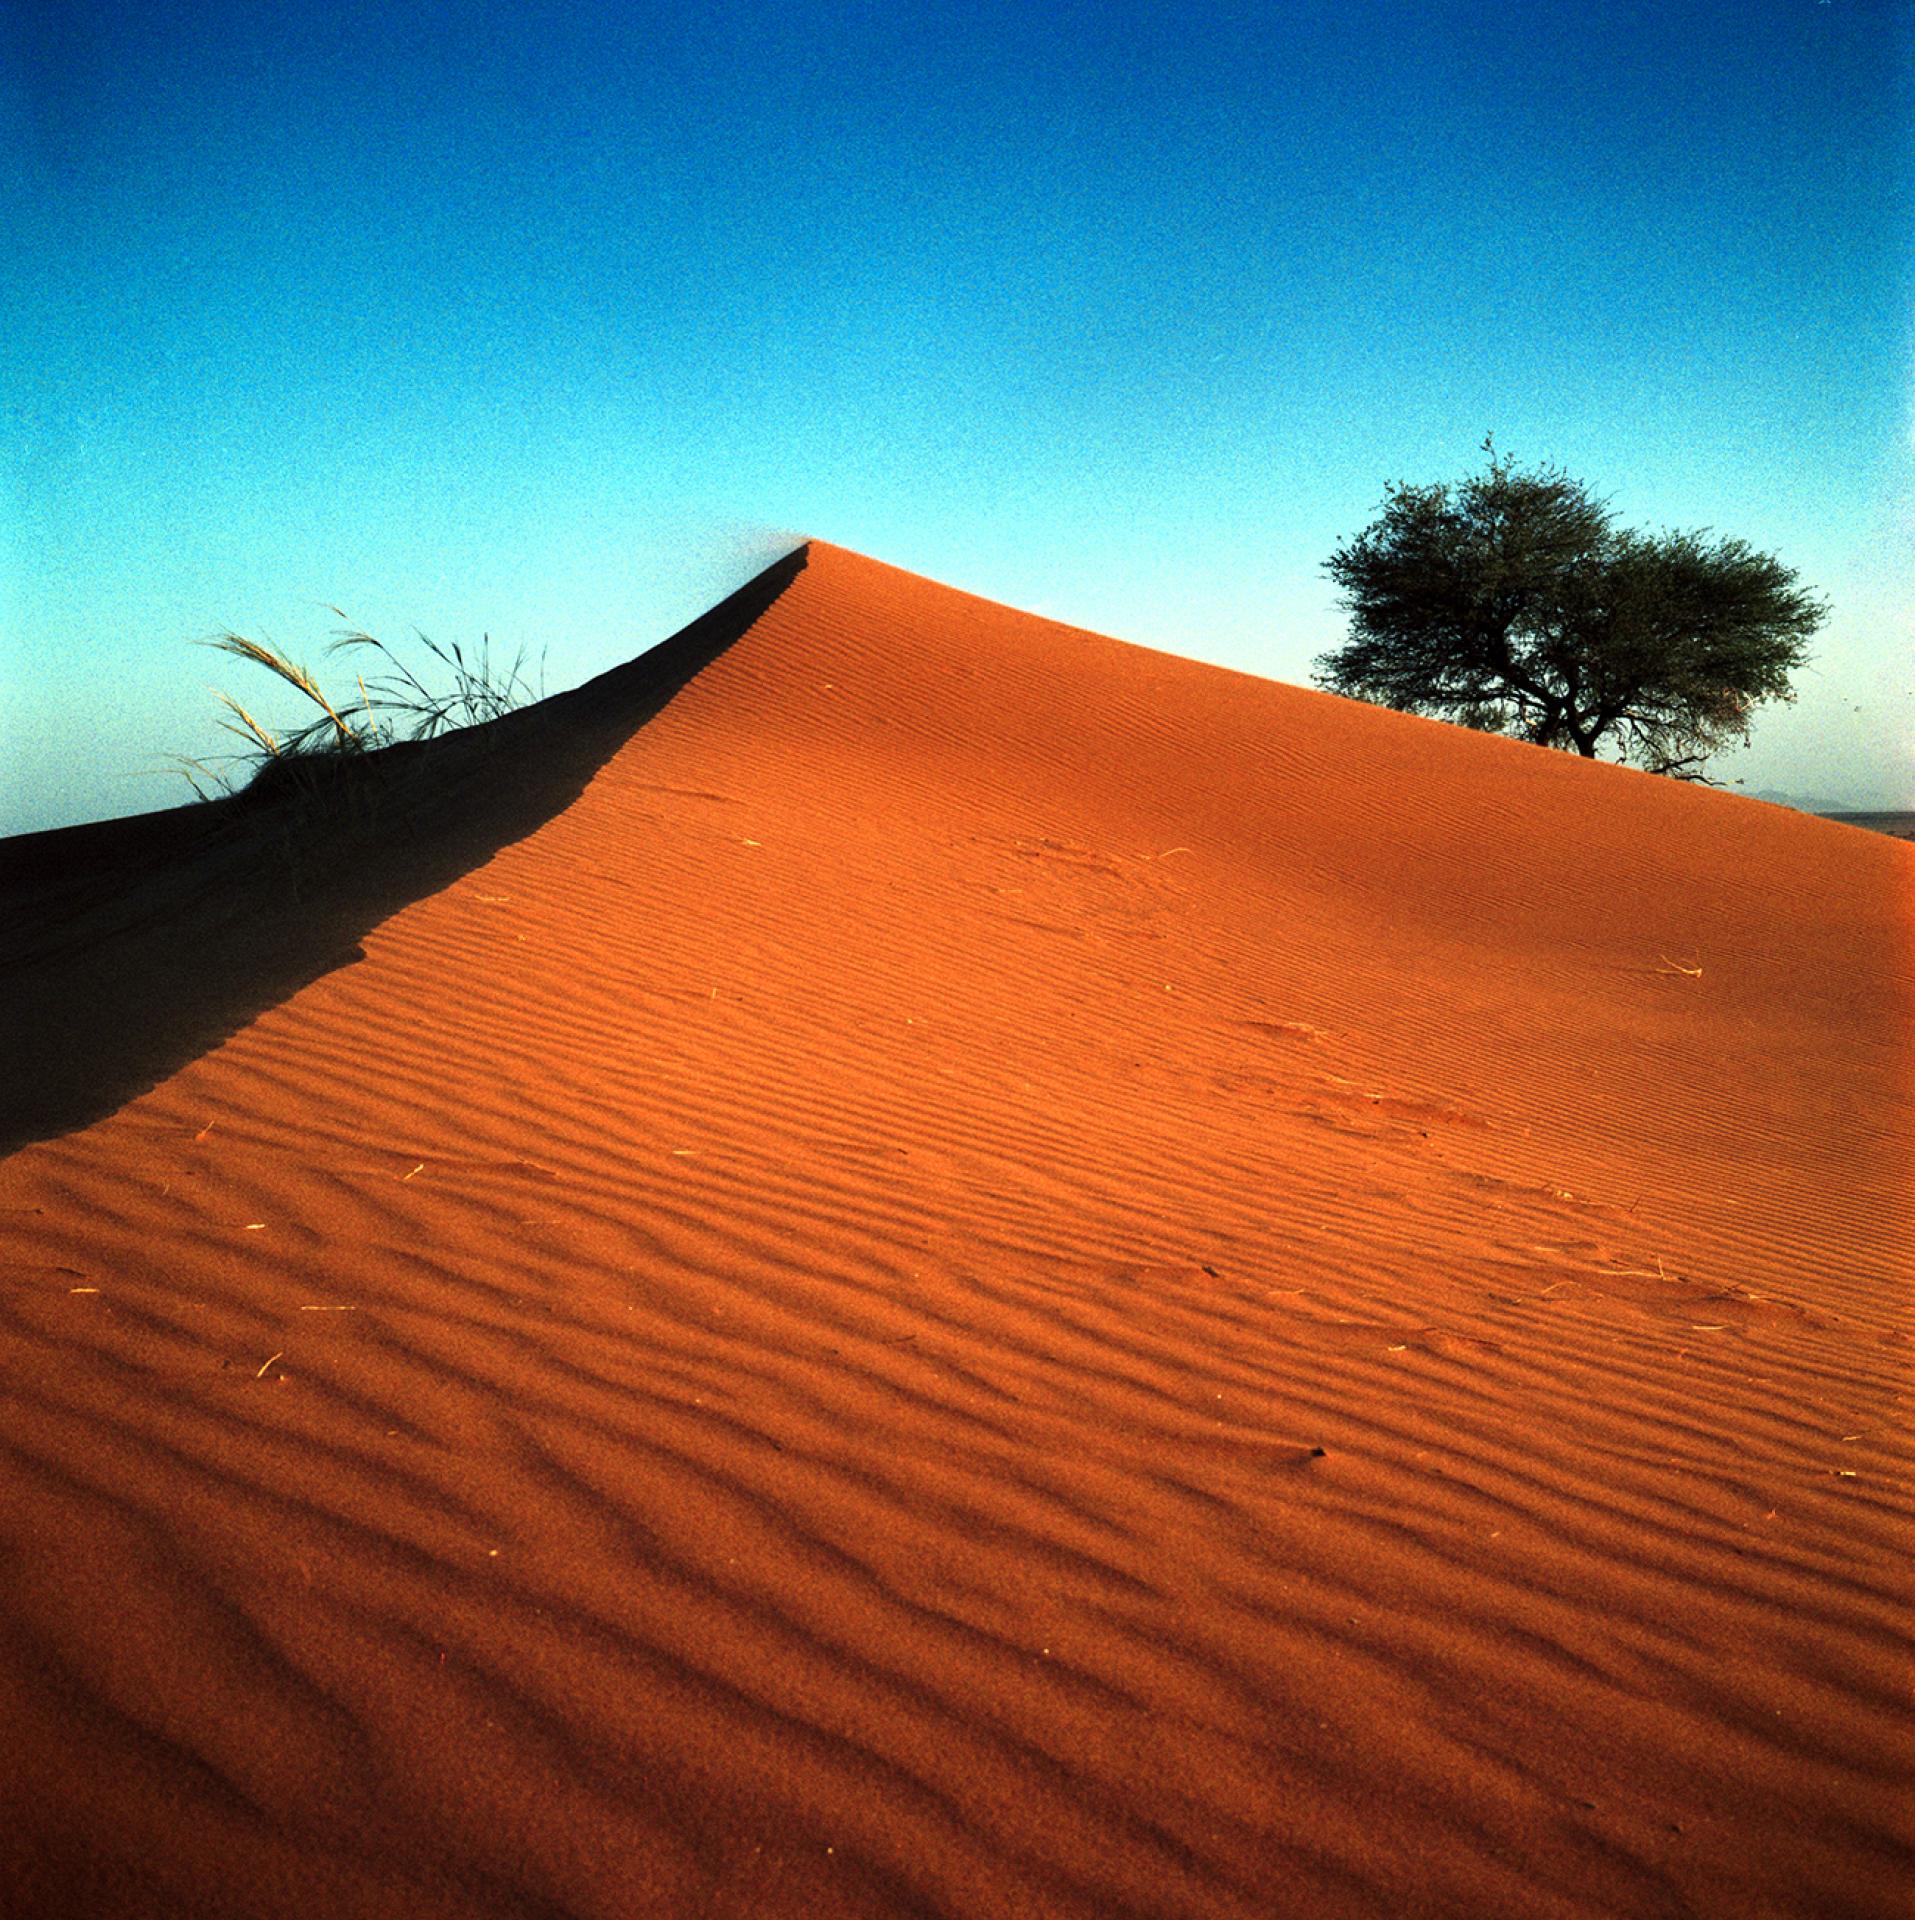 New York Photography Awards Winner - Deserts of Namibia